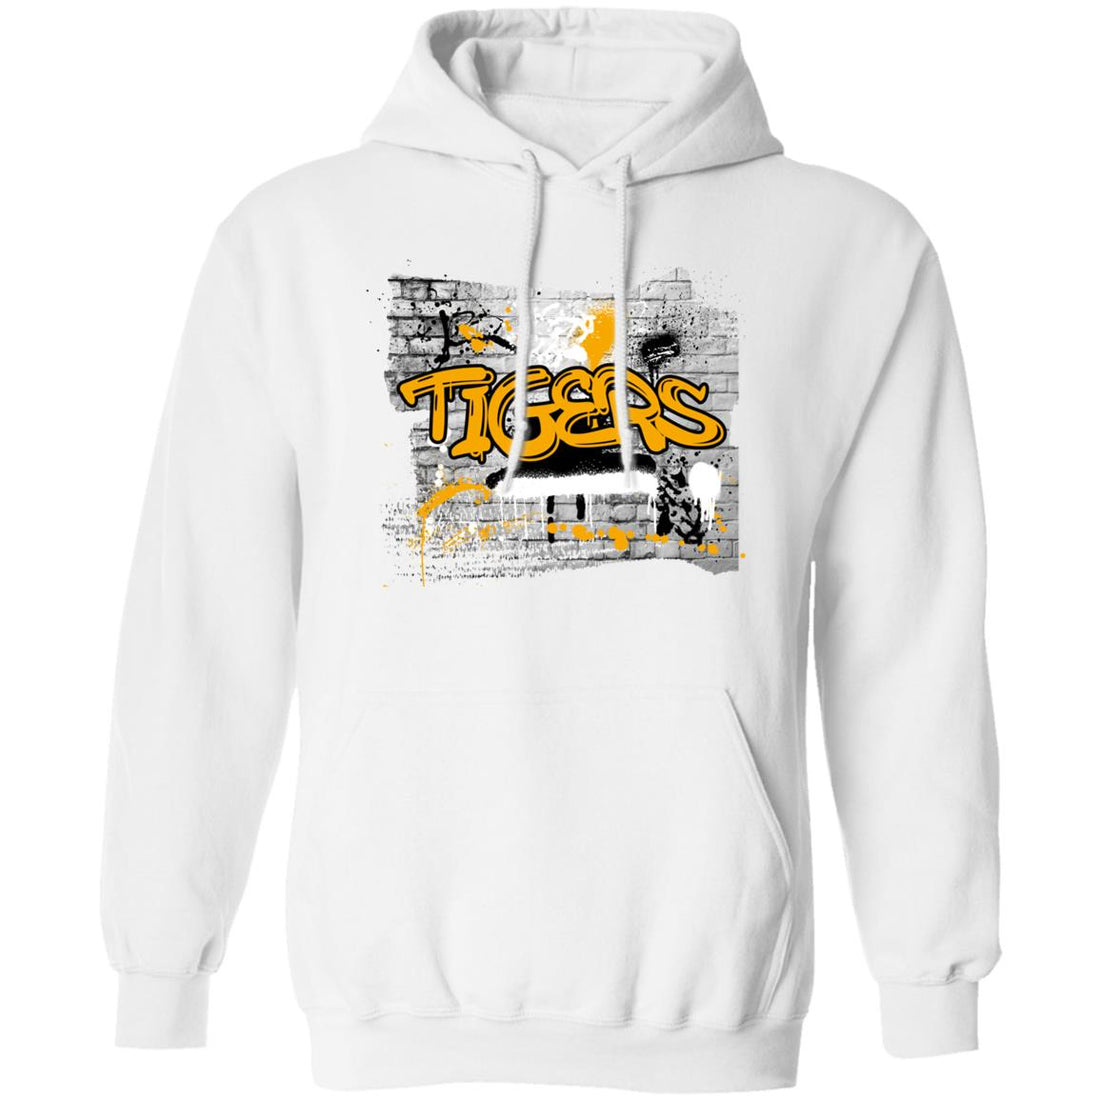 Tigers Graffiti Pullover Hoodie - Sweatshirts - Positively Sassy - Tigers Graffiti Pullover Hoodie